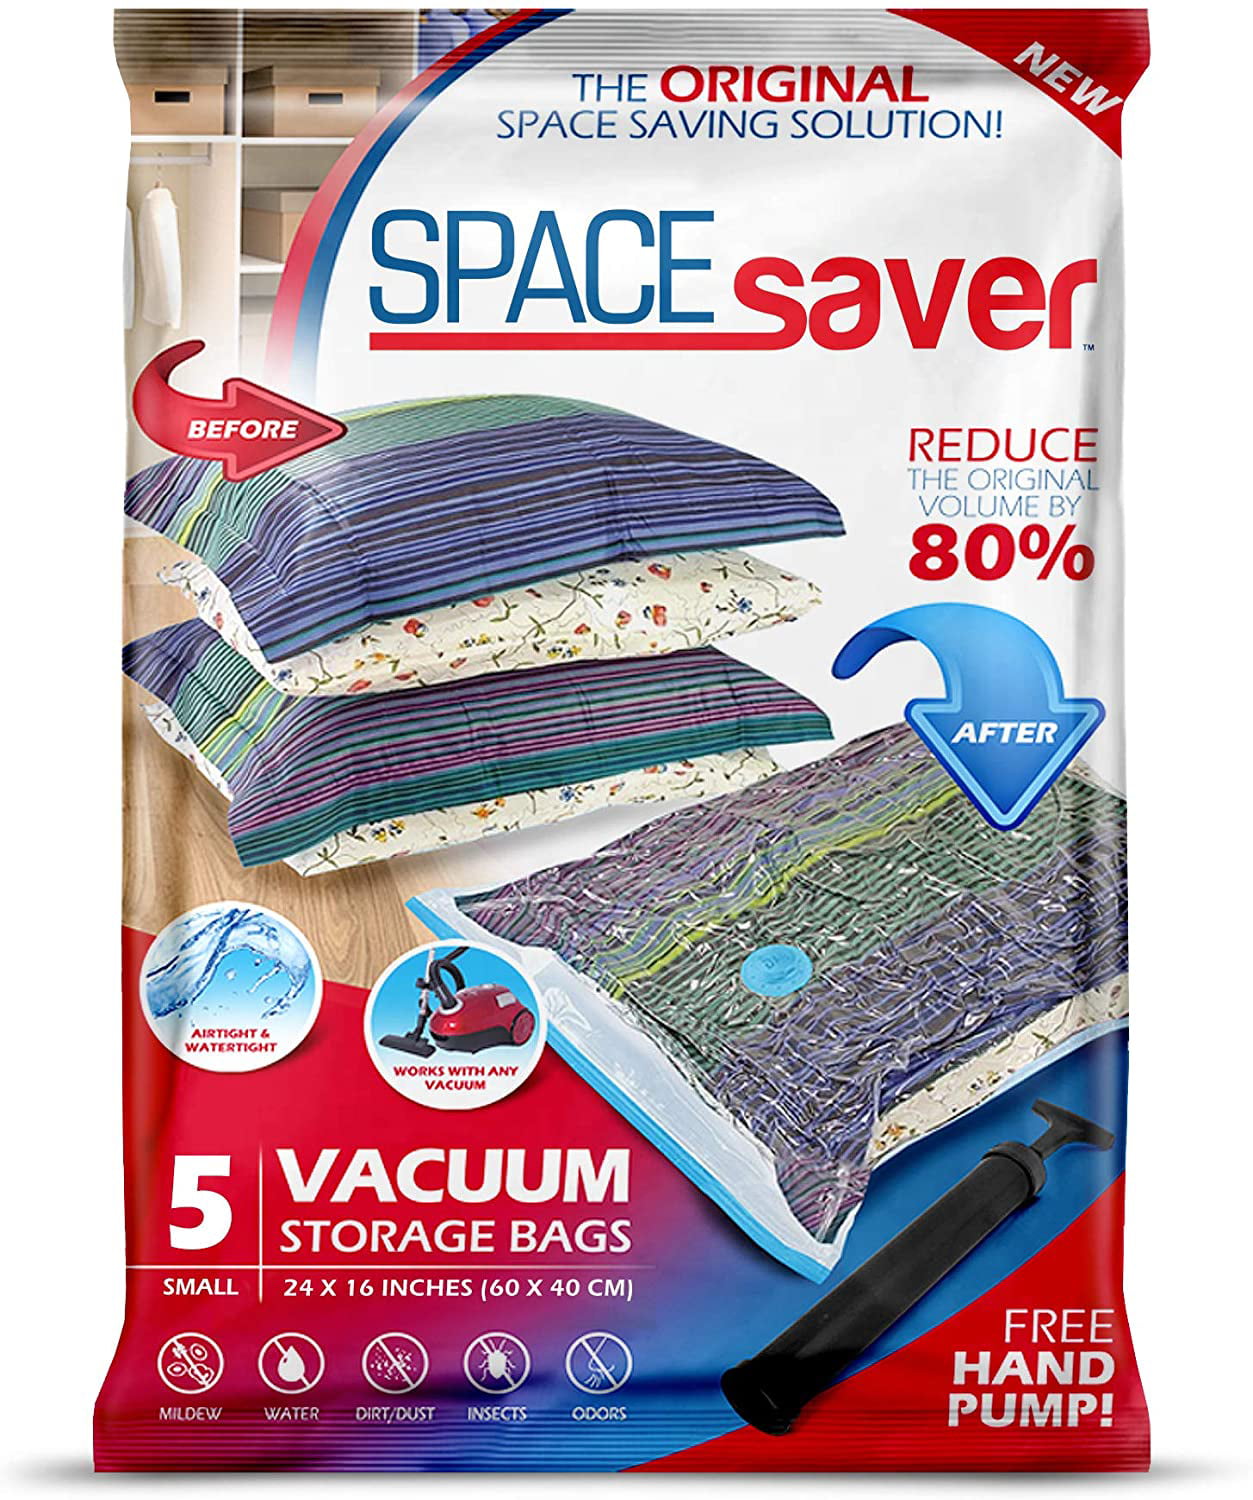 Details about   Strong Vacuum Storage Space Saving Bag Bags Vac Bag Space Saver Vacum Bag Lot 